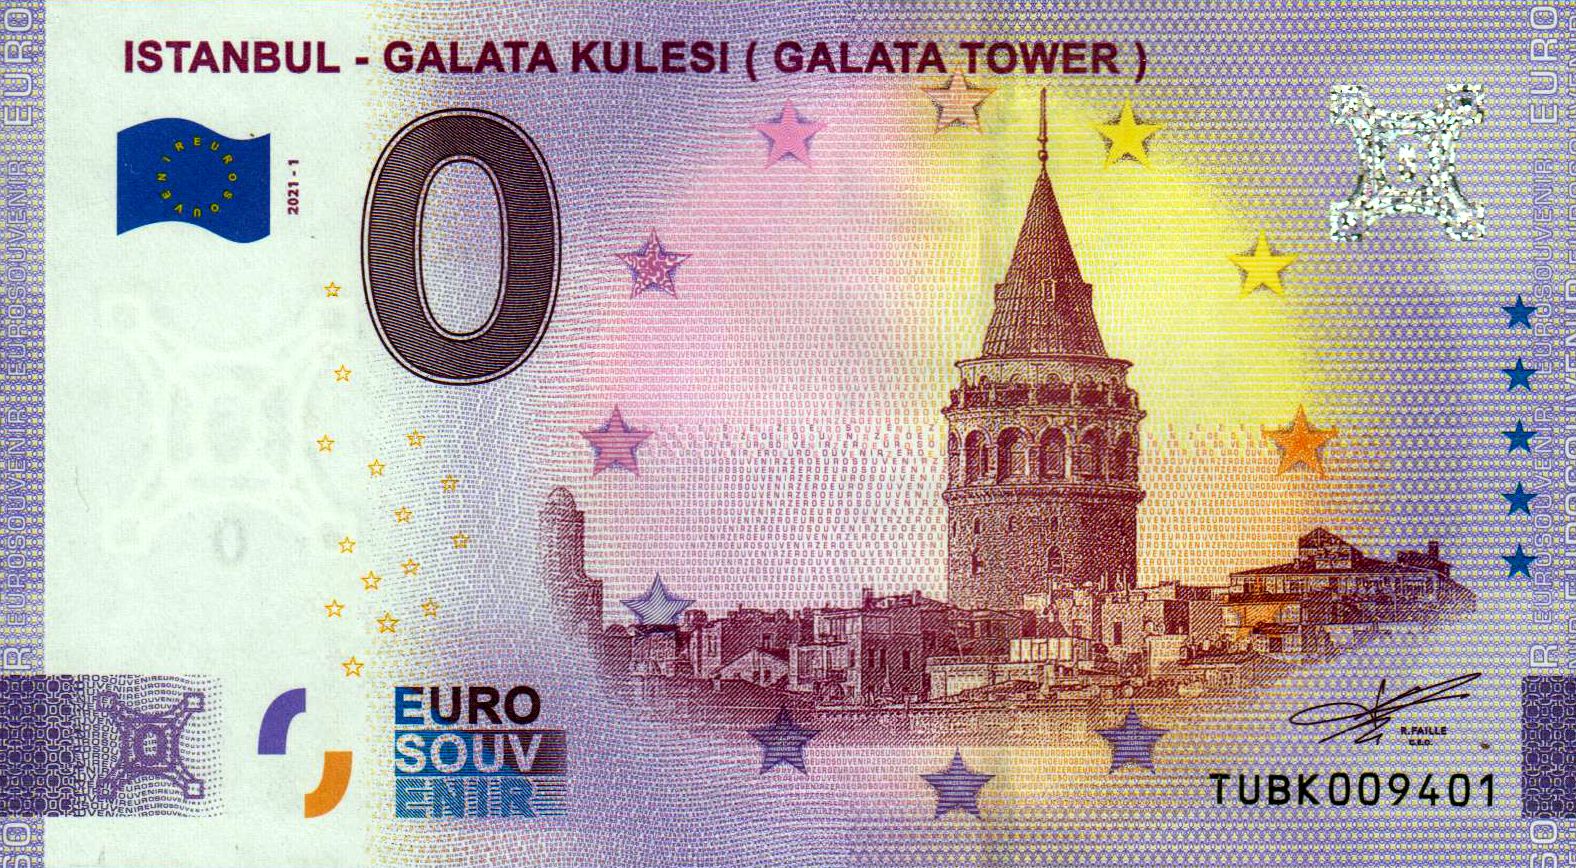 Istanbul - Galata Kulesi (Galata Tower) 2021-1 Anniversary